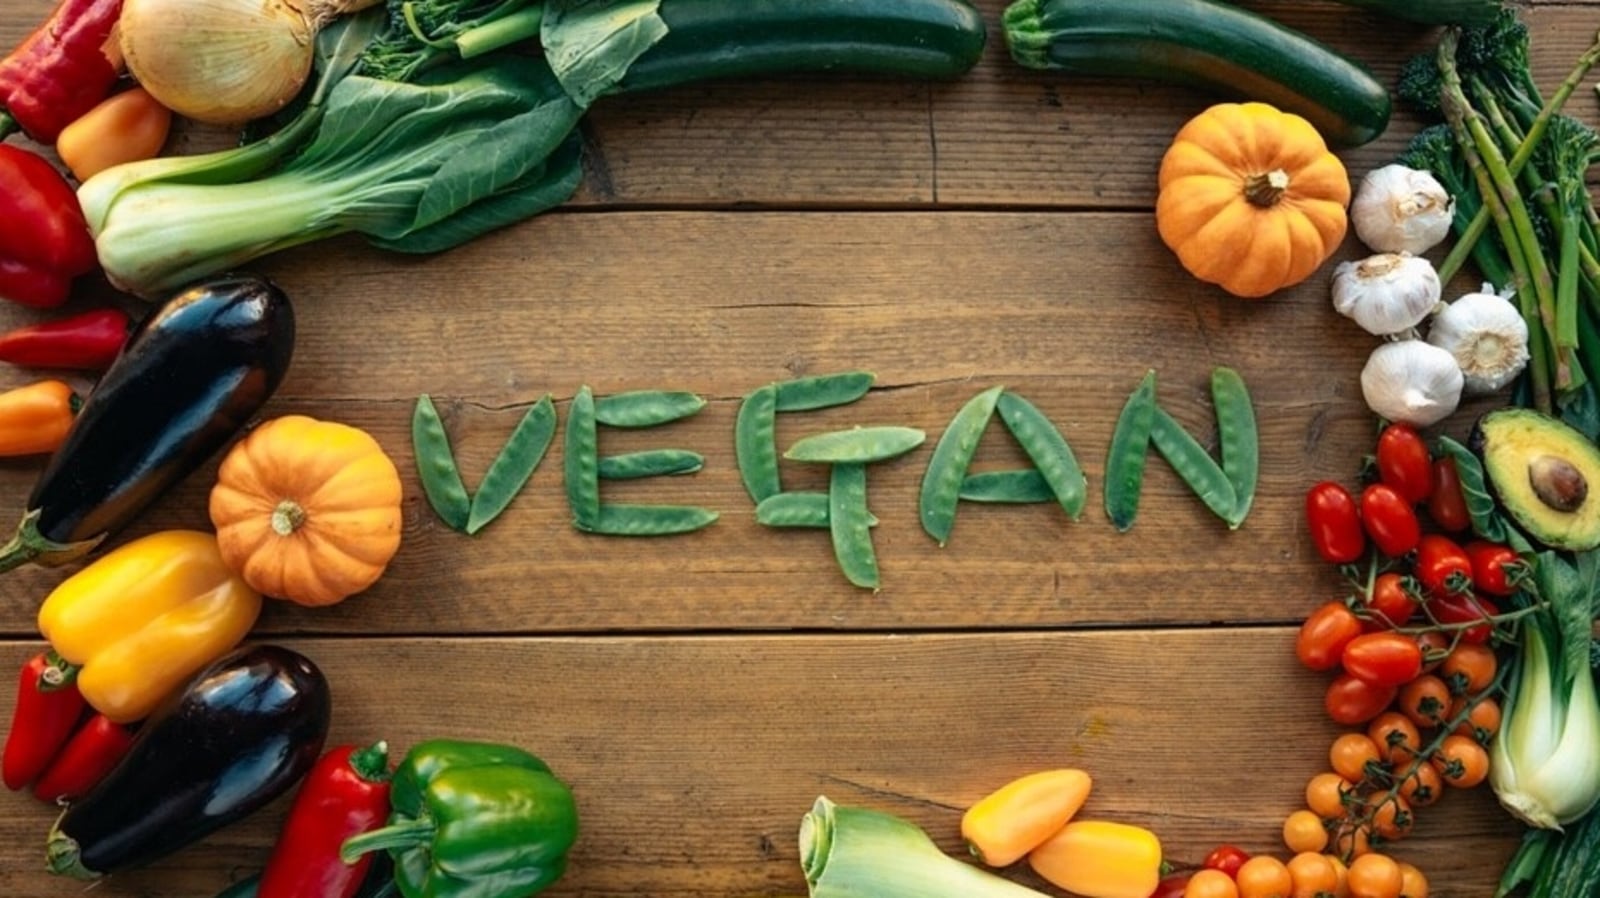 World Vegan Day: Know the health benefits of a vegan diet